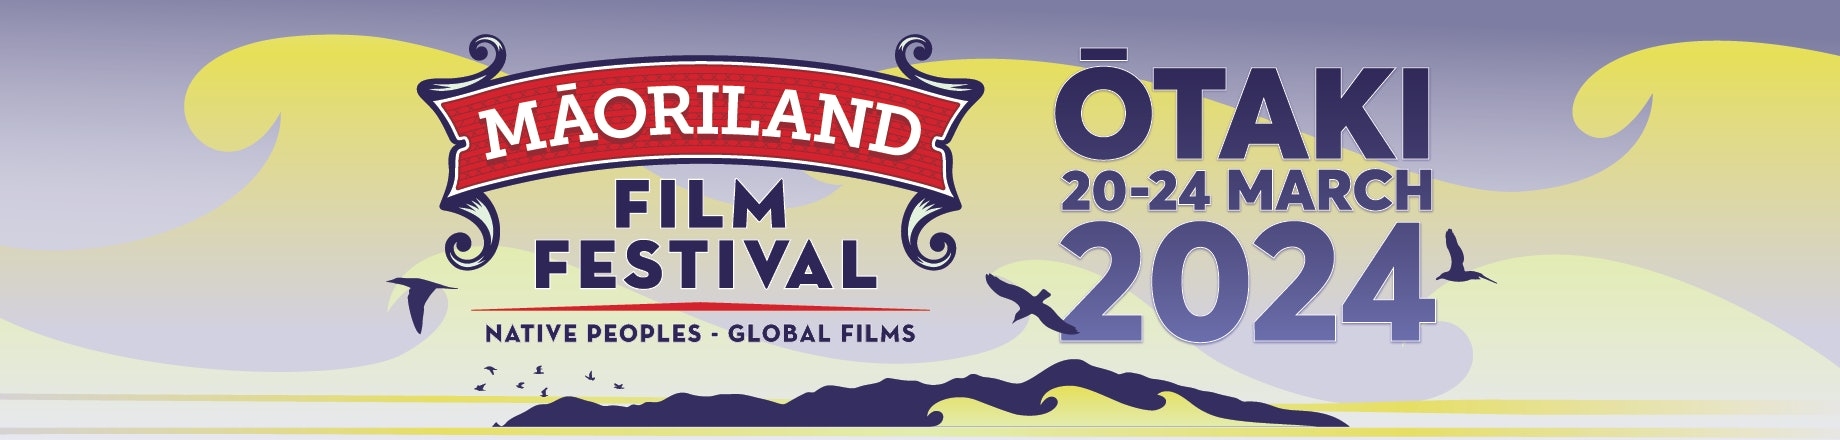 Maoriland Film Festival 2024